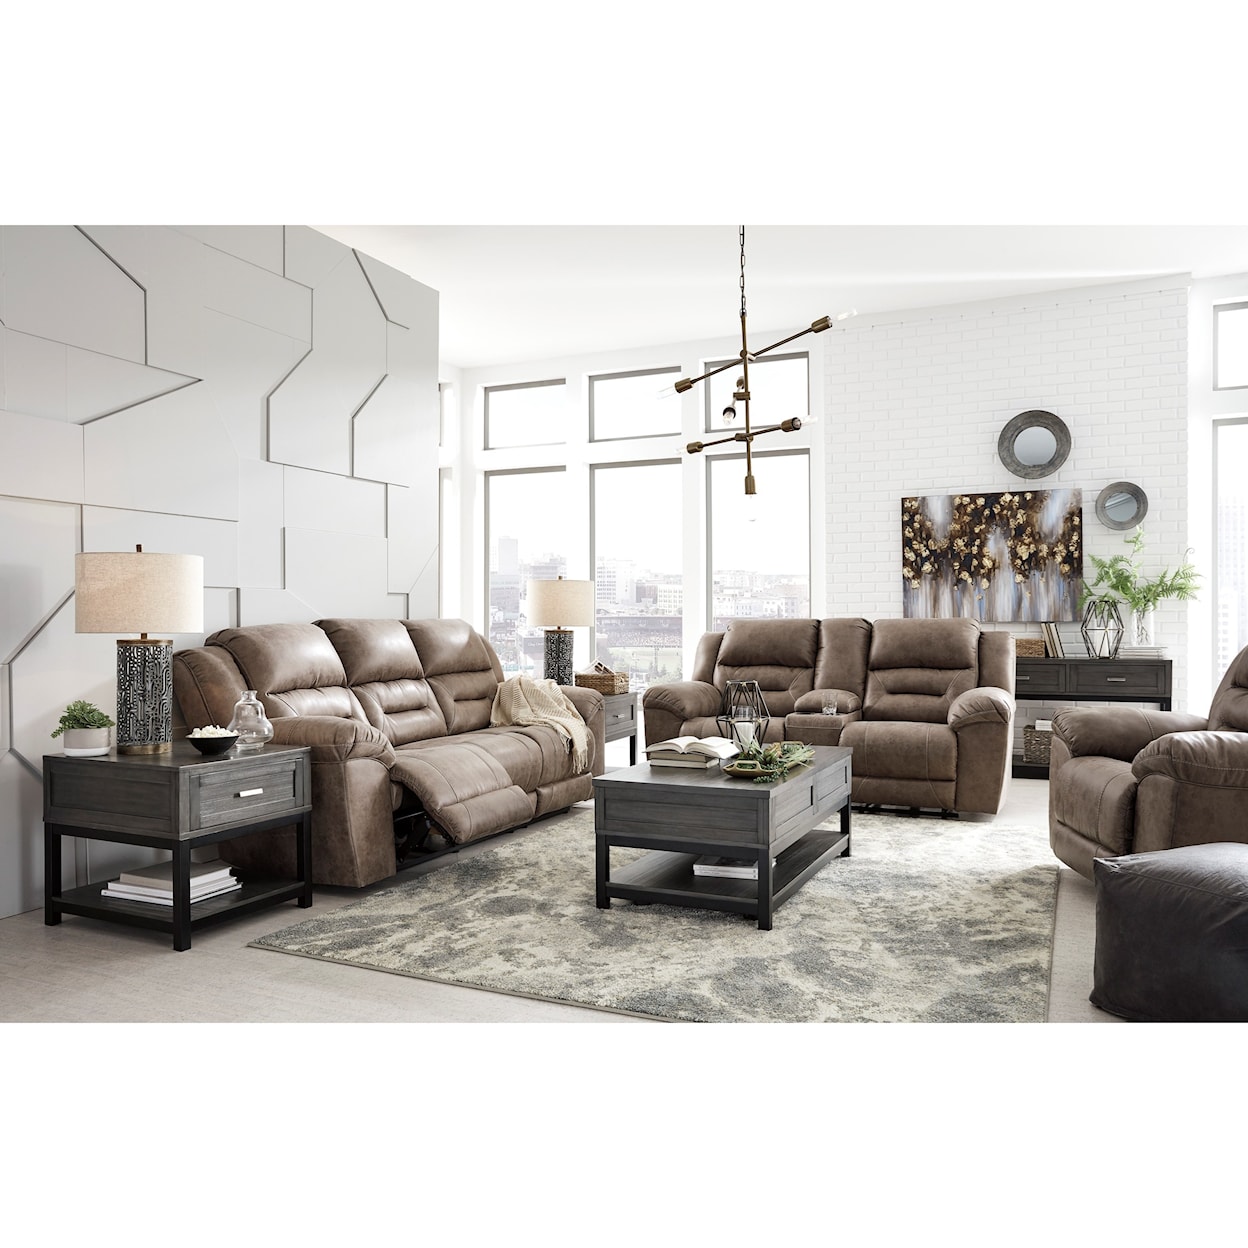 Ashley Furniture Signature Design Stoneland Reclining Living Room Group